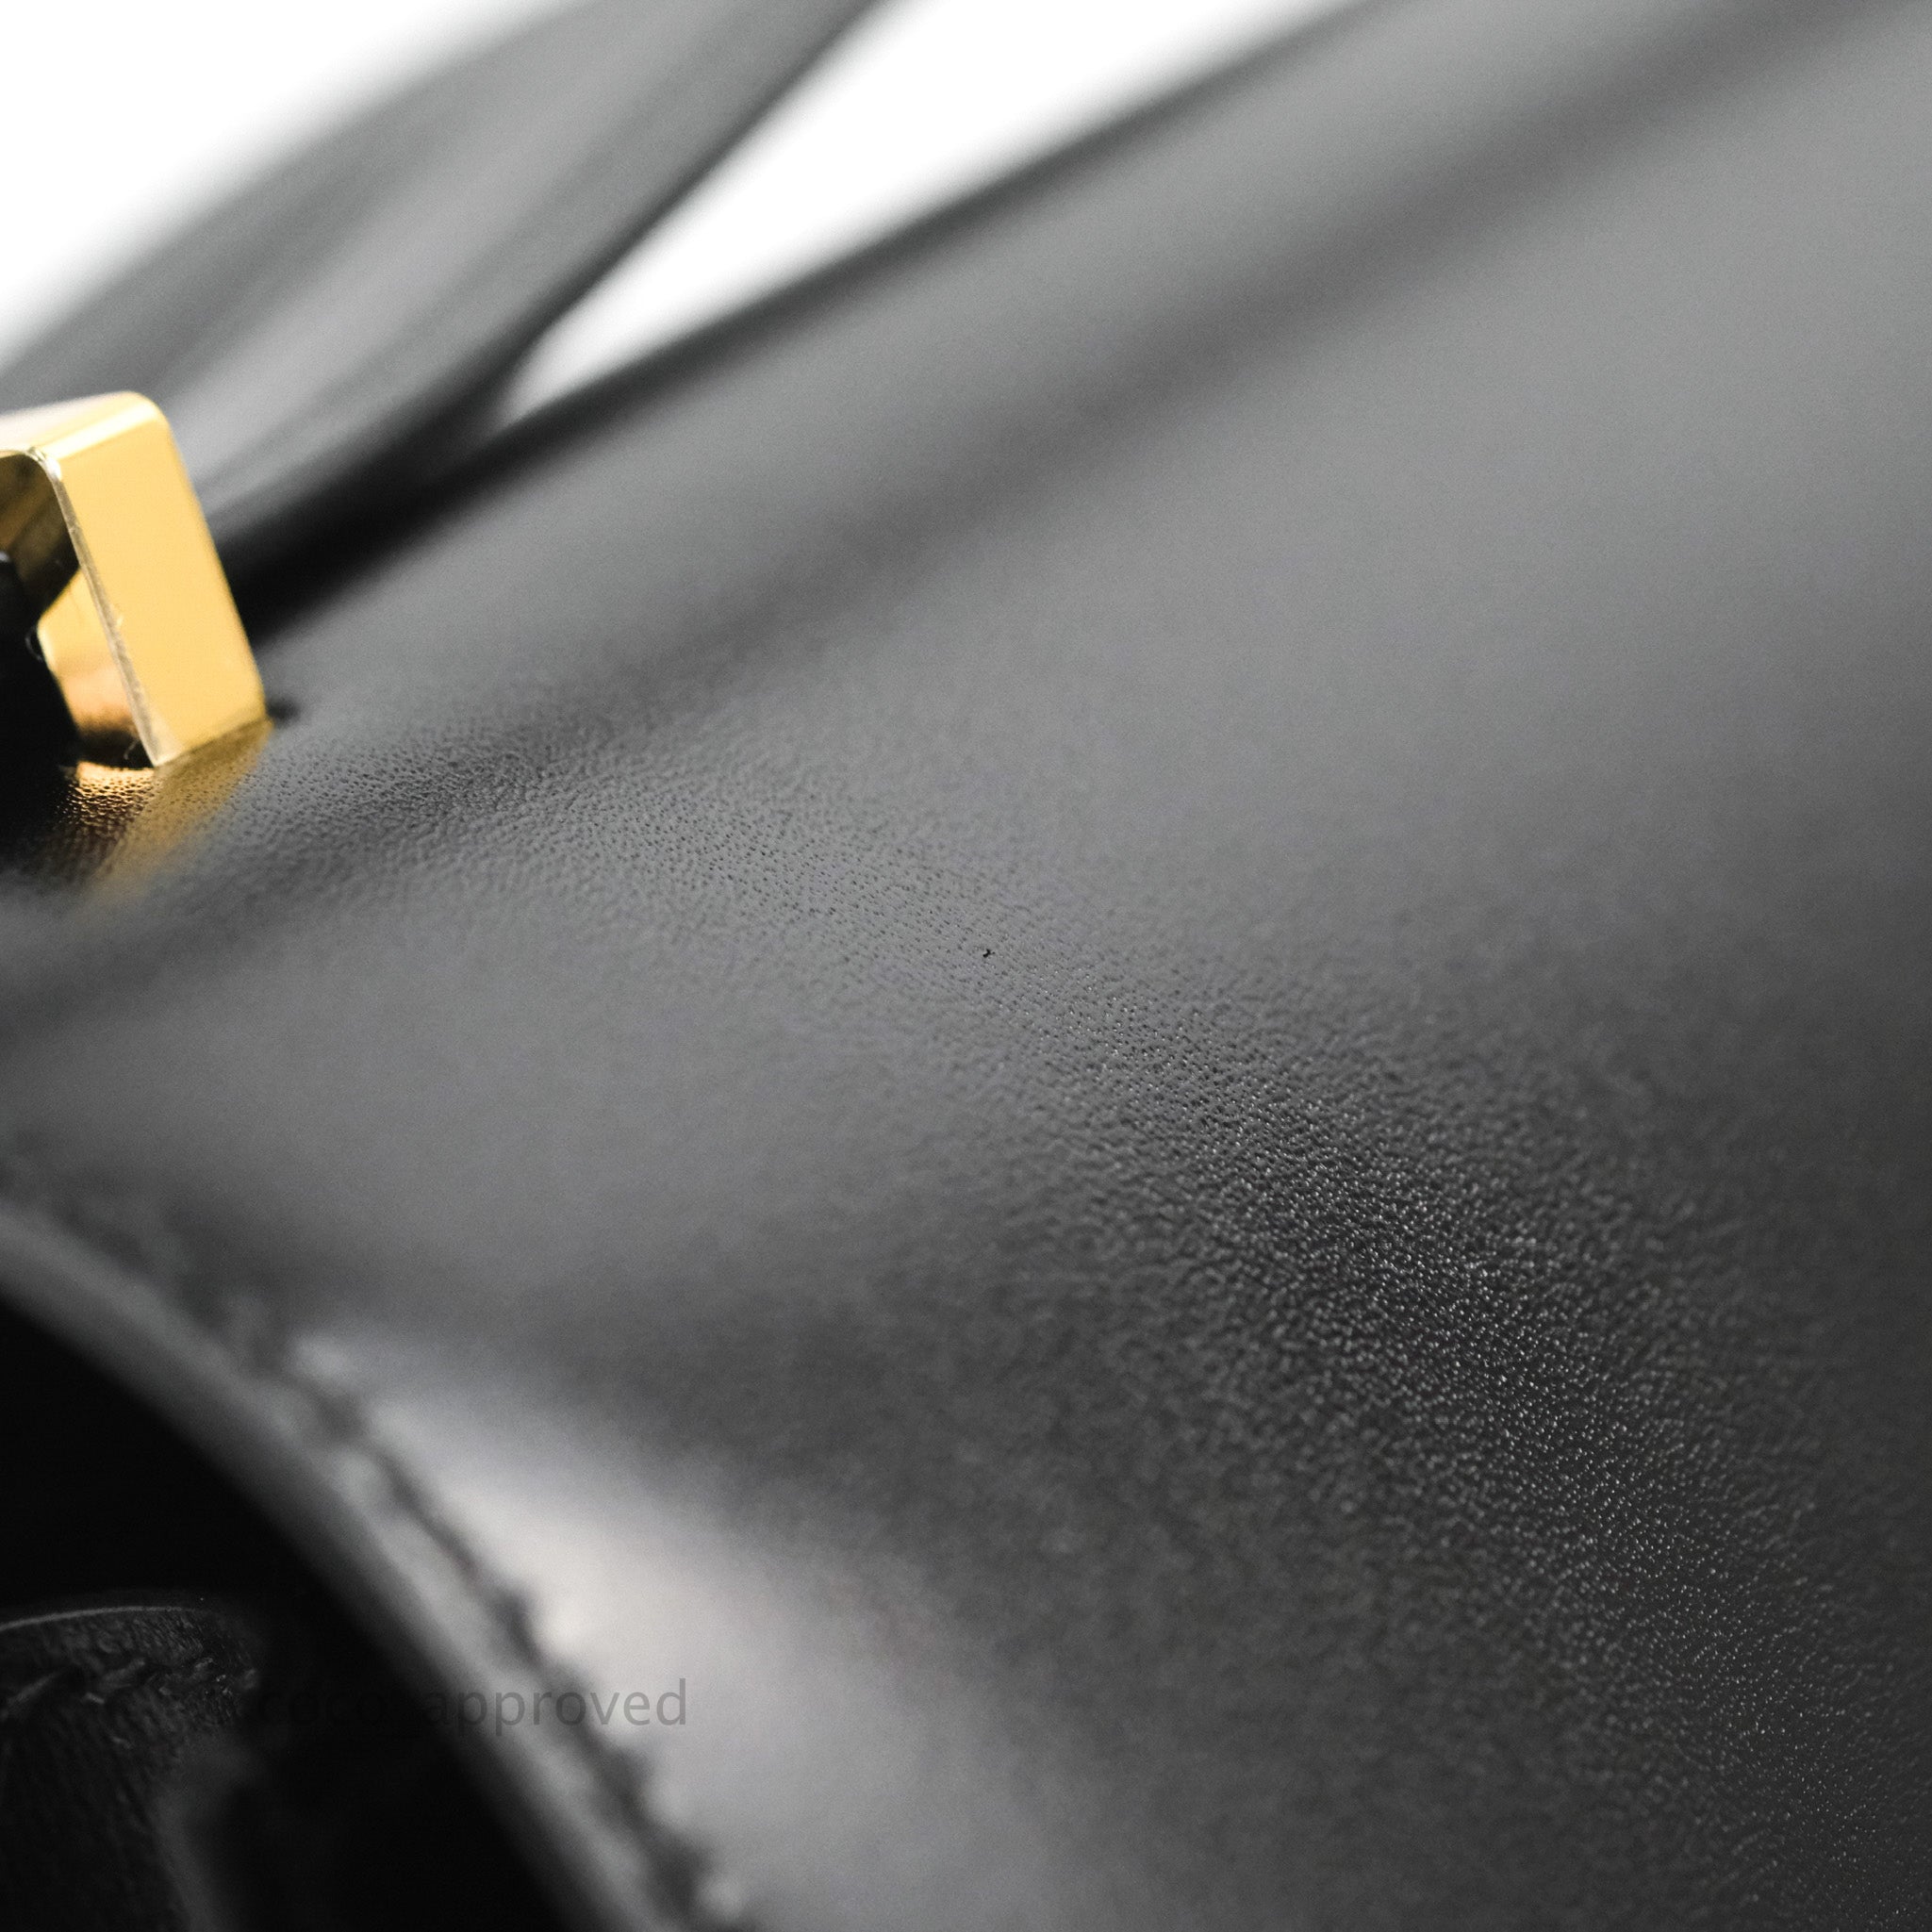 Hermes　Constance mini　Mirror　Black　Box Calf leather　Gold hardware